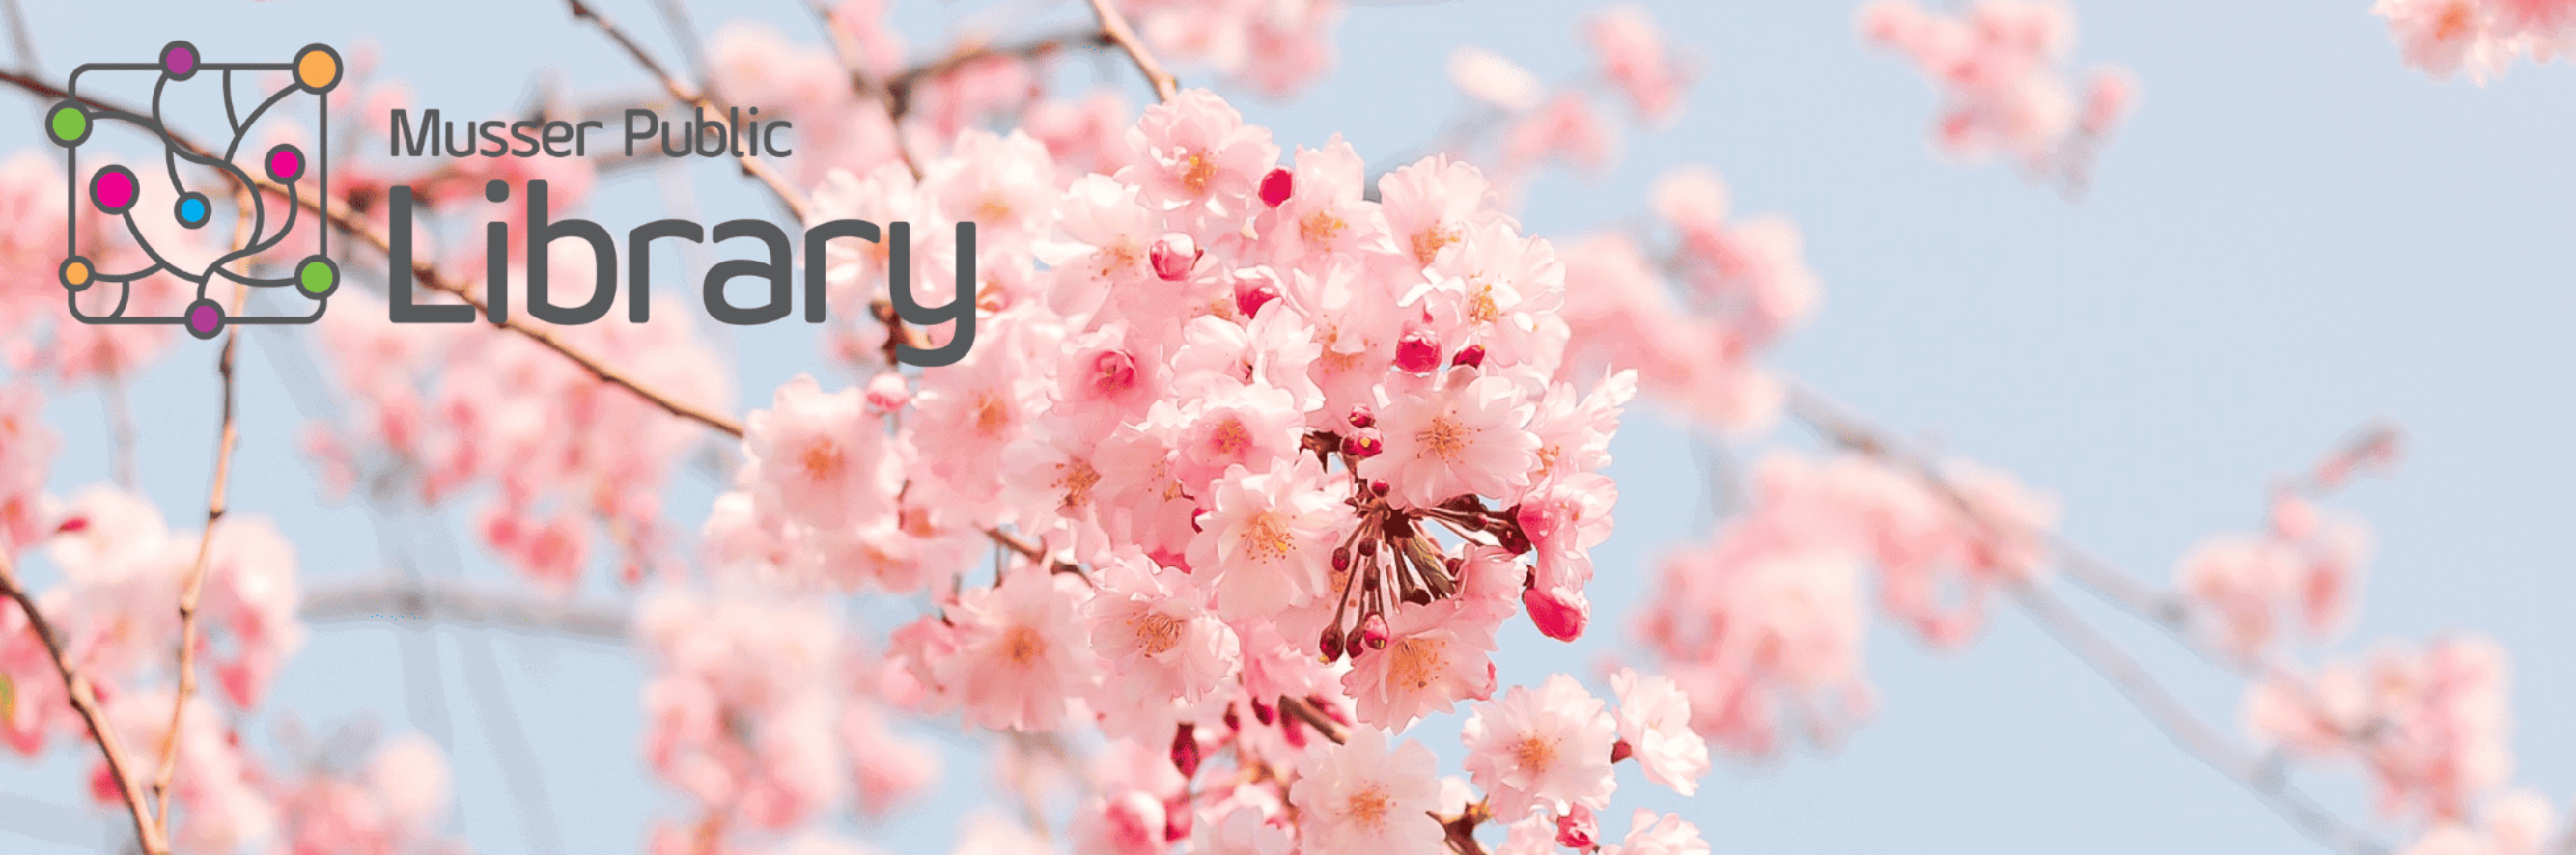 Spring-blossoms-website-header-w-logo-top-corner